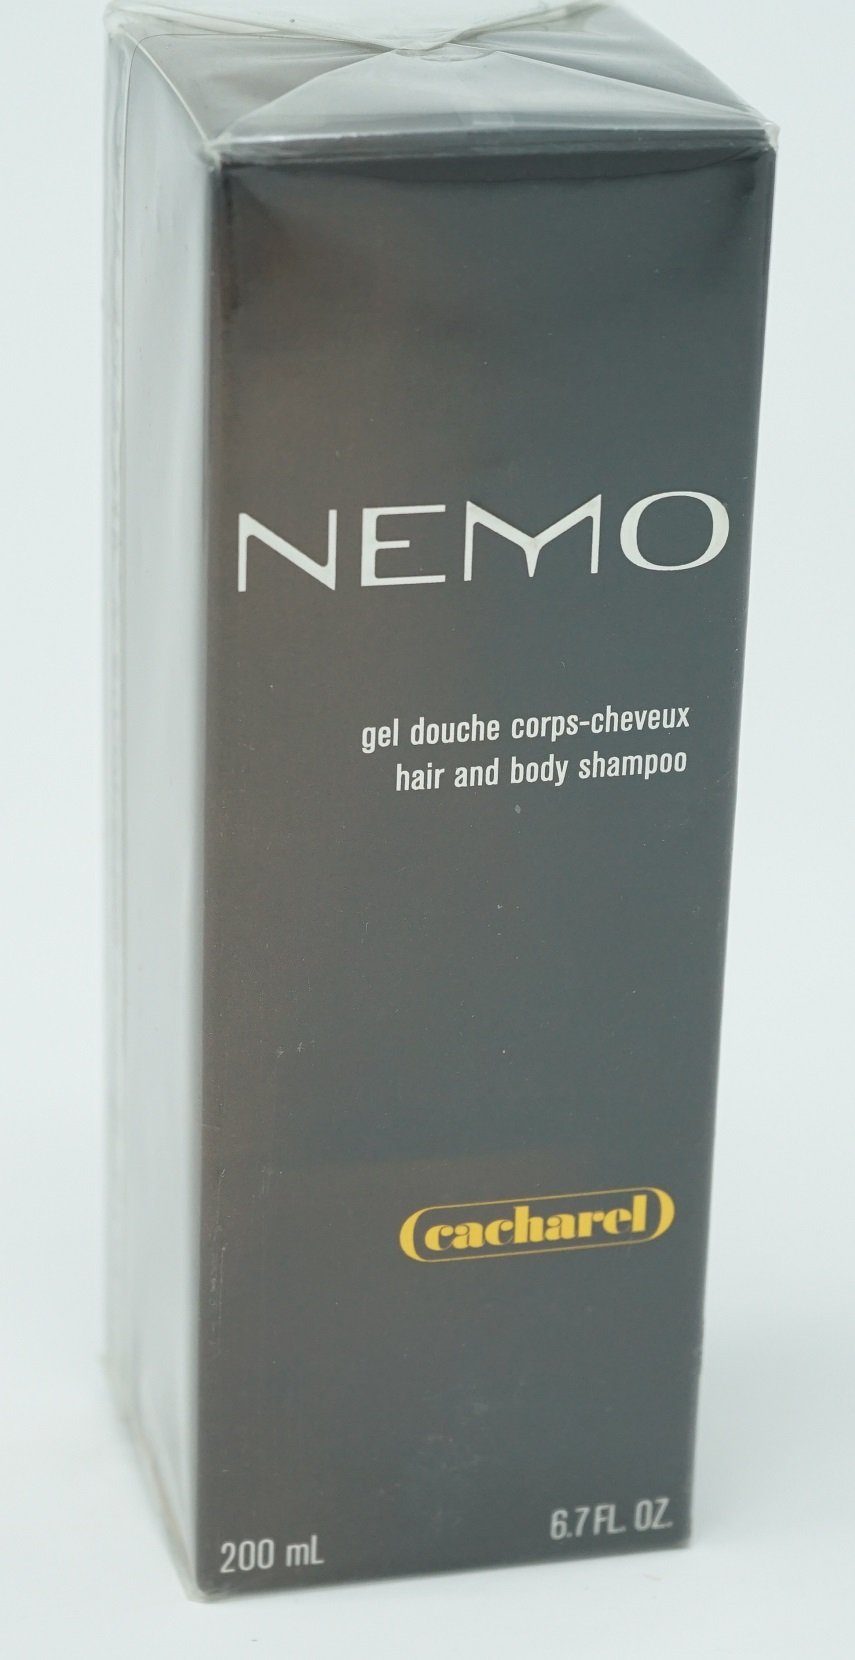 CACHAREL Haarshampoo ml 200 NEMO Body Cacharel and Hair Shampoo